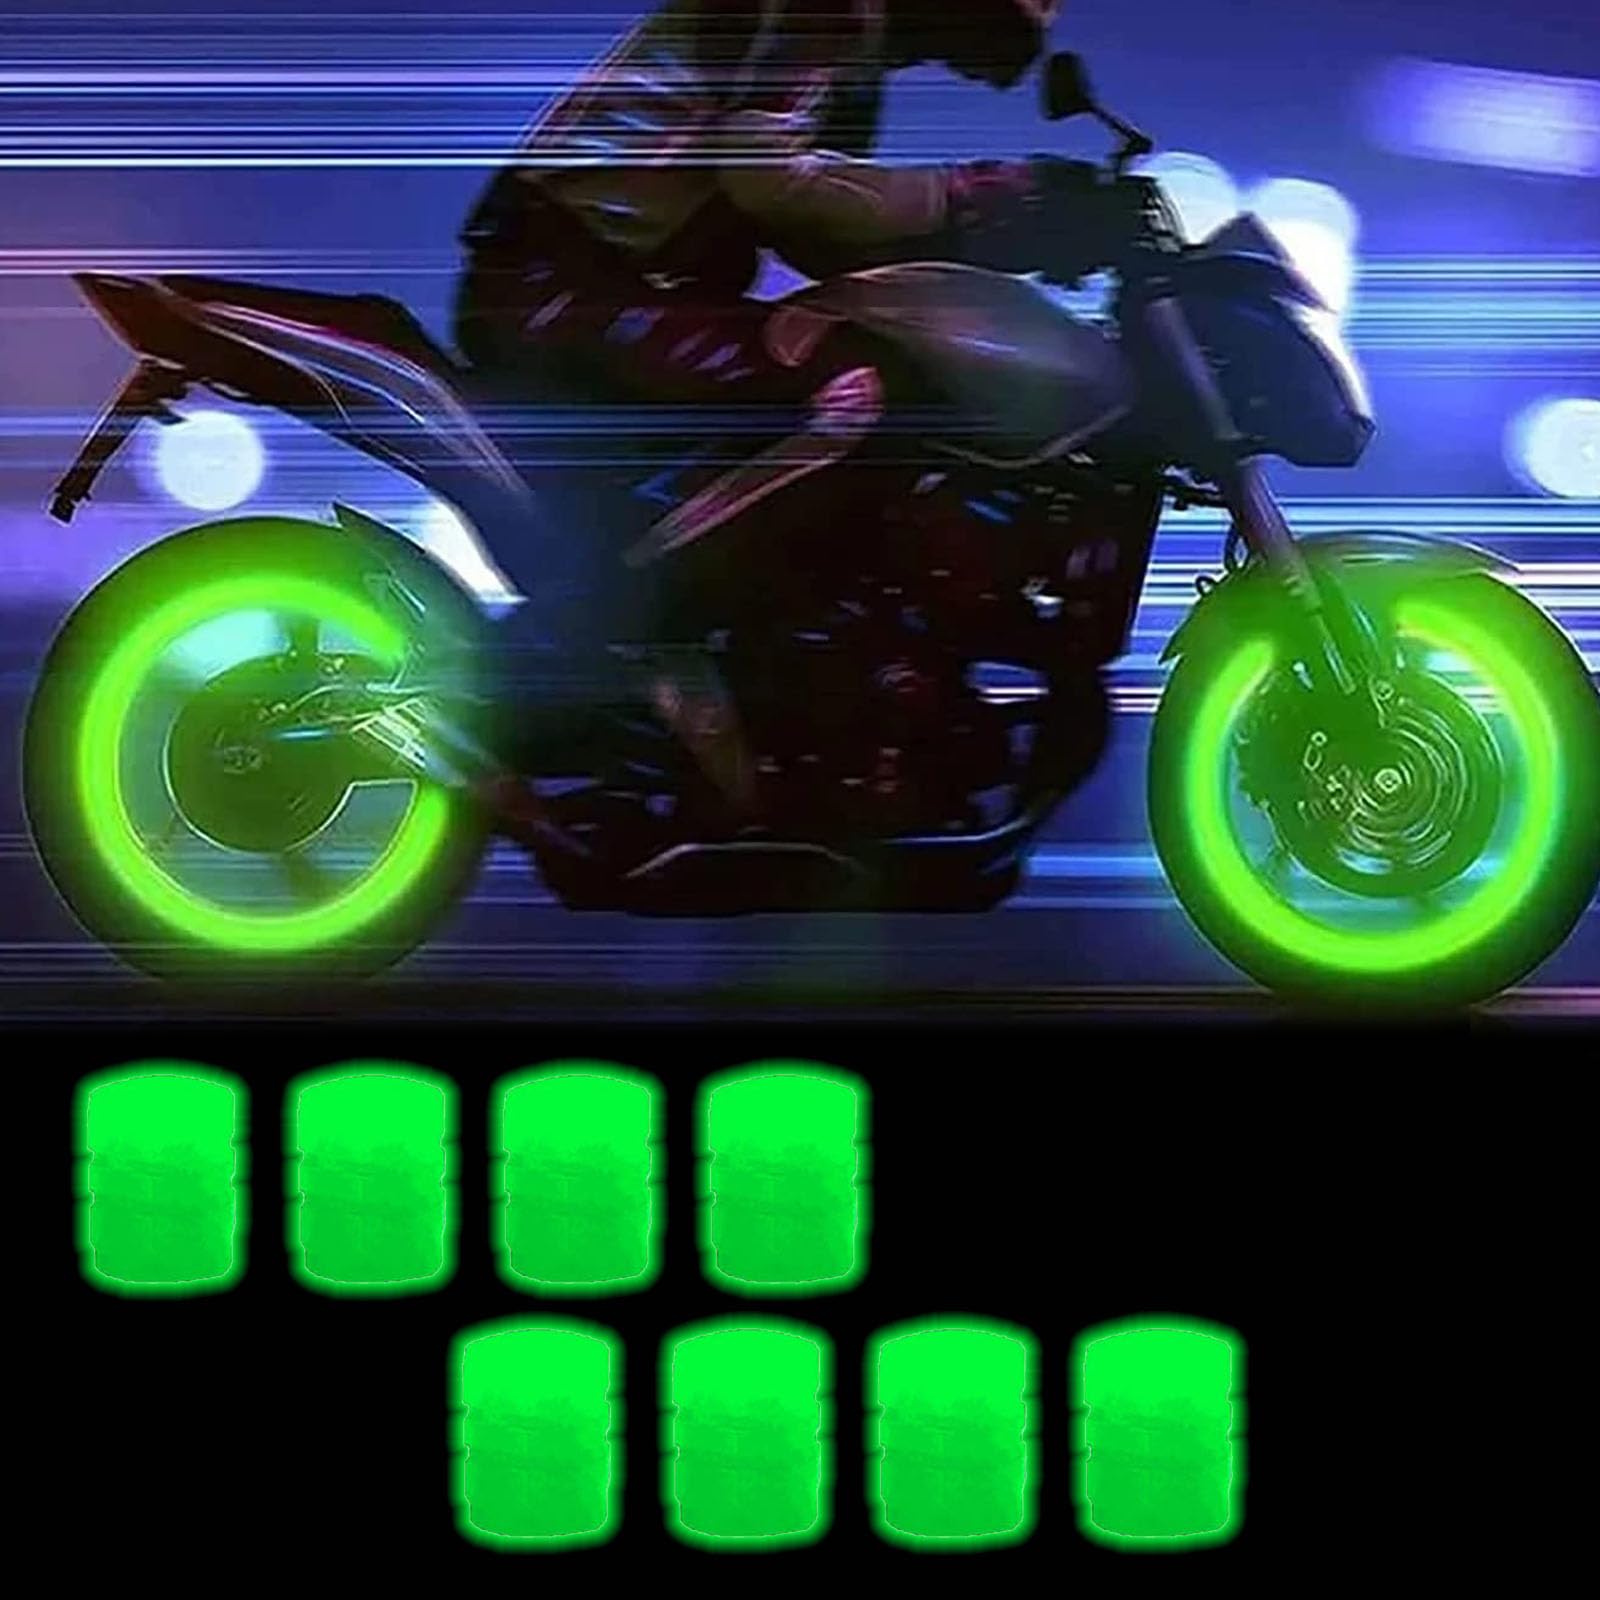 Donubiiu Glow In The Dark Tire Valve Caps, Luminous Car Tire Valve Stem Caps, Light Up Tire Valve Caps, Universal Fluorescent Glowing Valve Caps for Cars, Bicycle, Trucks, SUV, Motorbike (8pcs Green) von Donubiiu